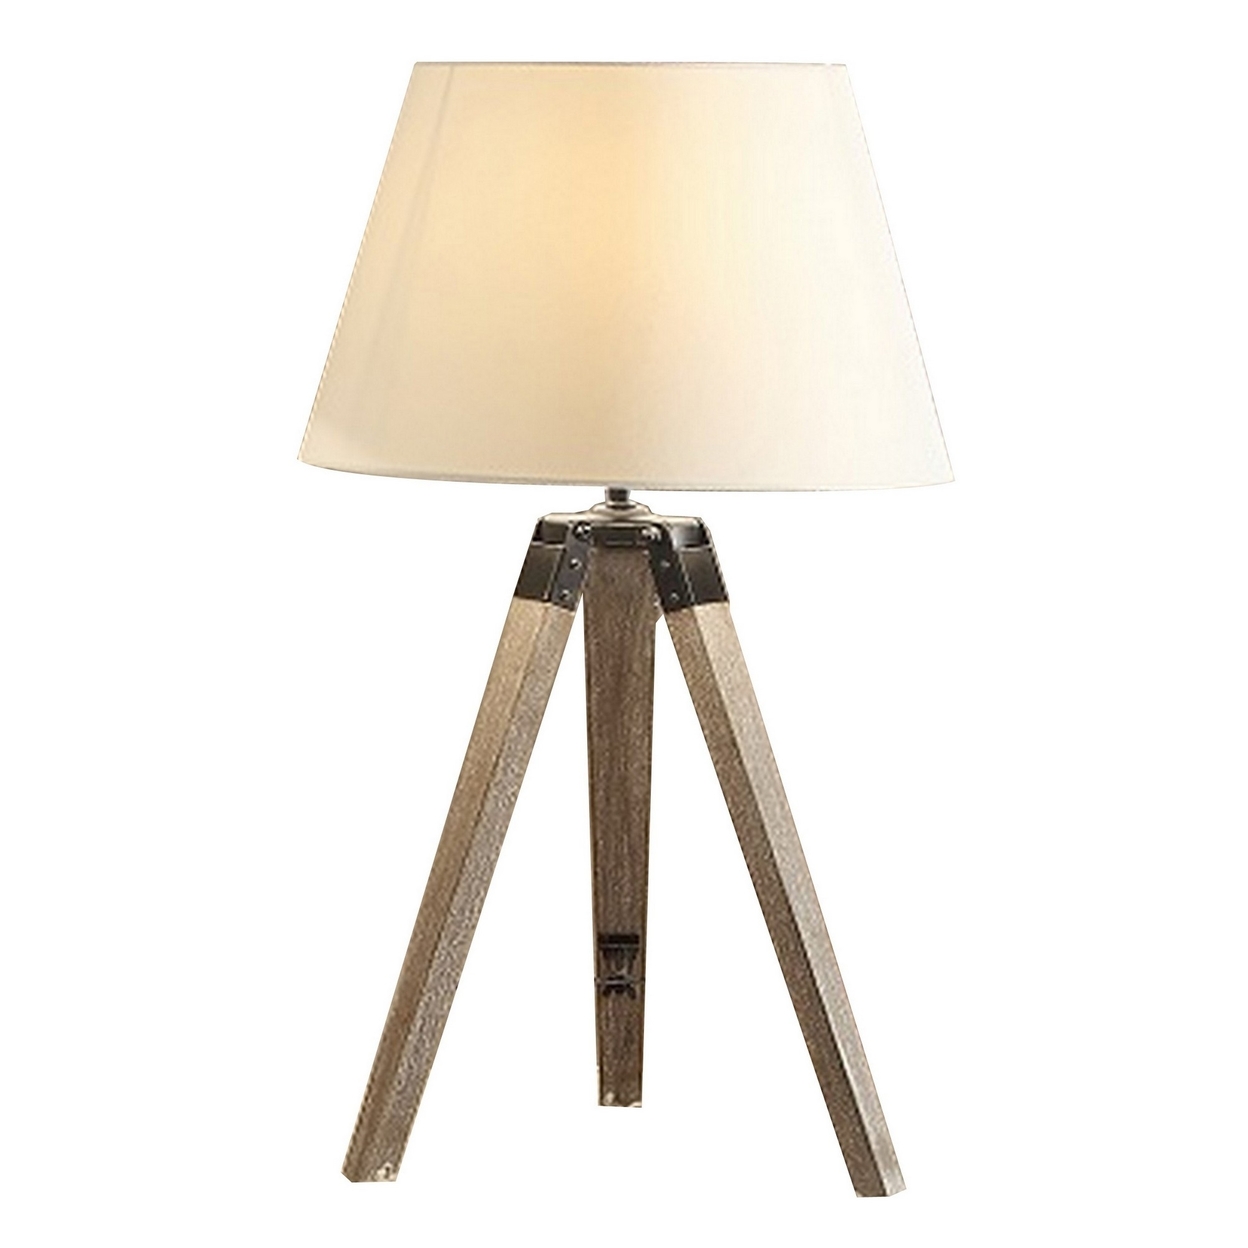 27 Inch Table Lamp, Tripod Legs Base, Empire Shade, Natural Wood, Gray -Saltoro Sherpi